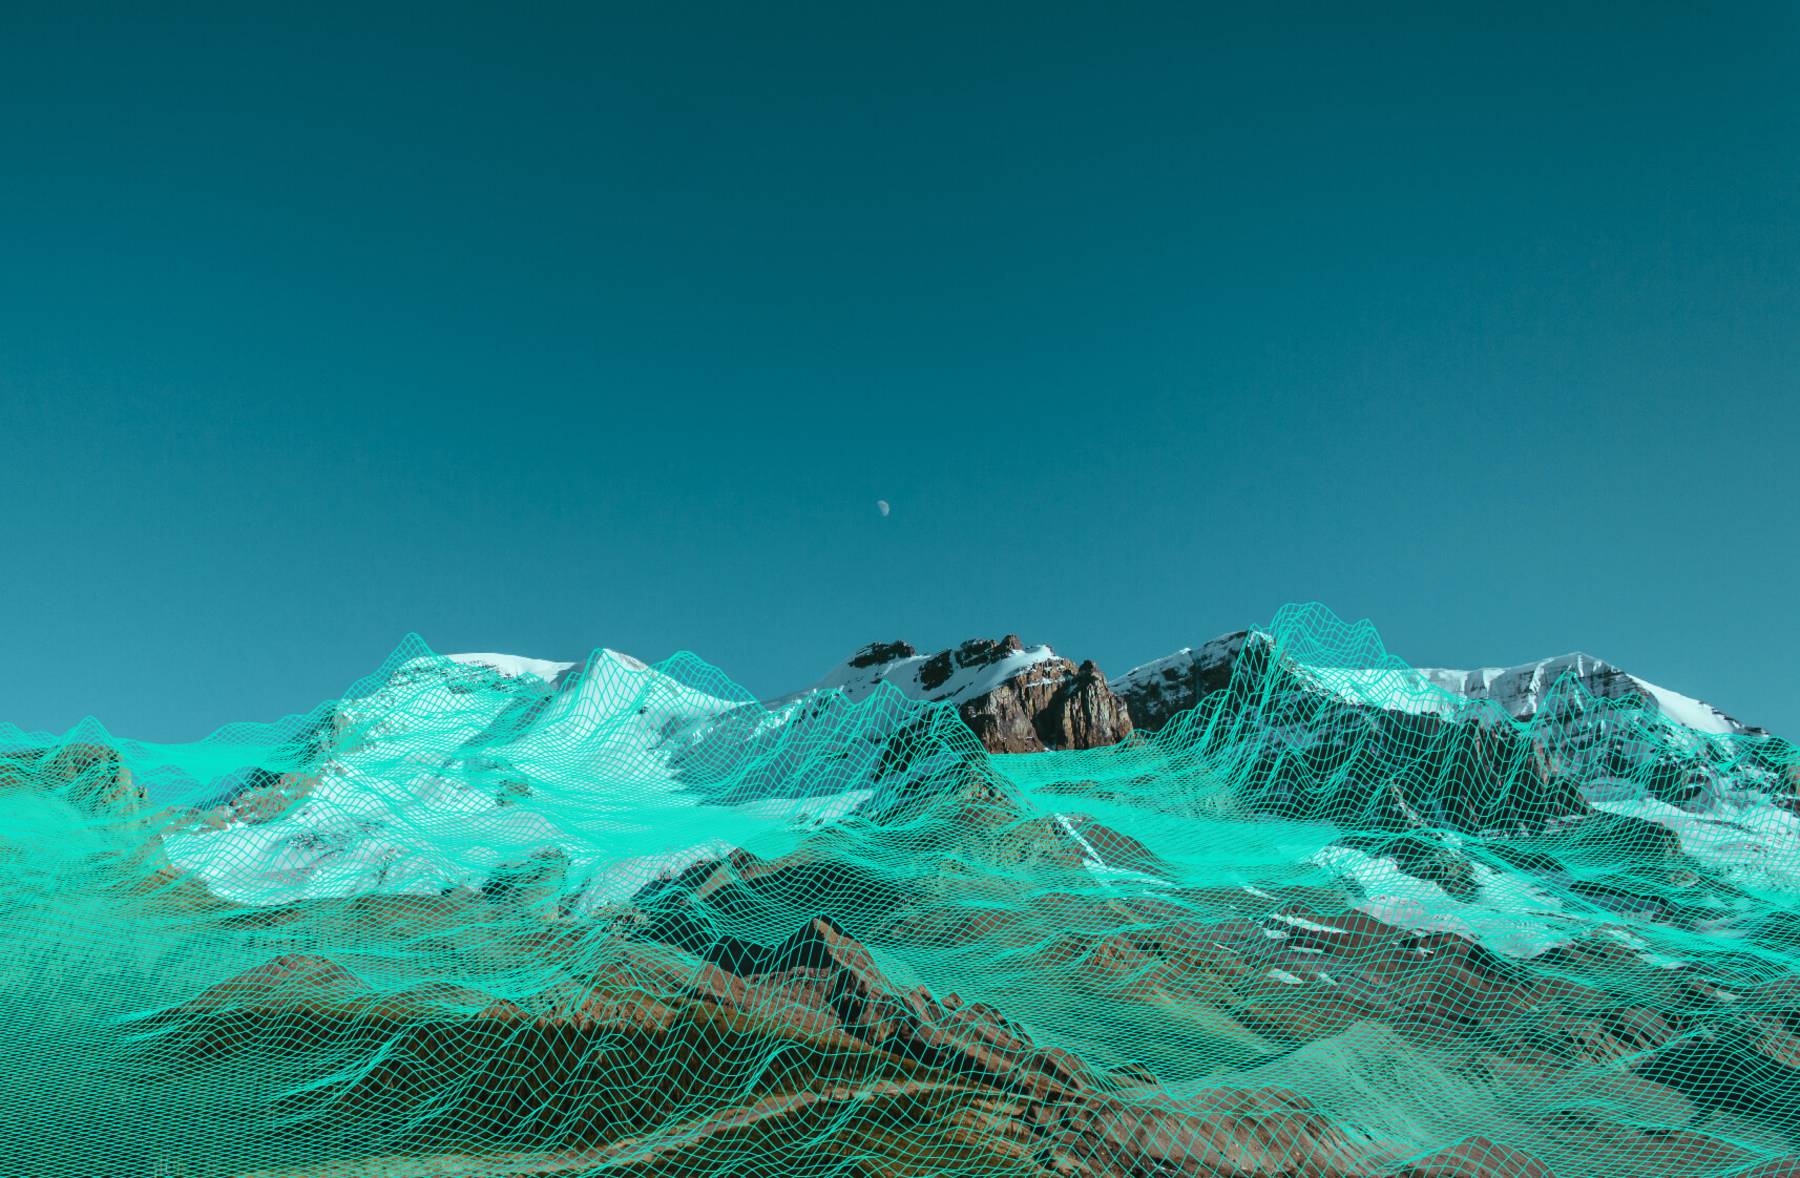 Digital mountains